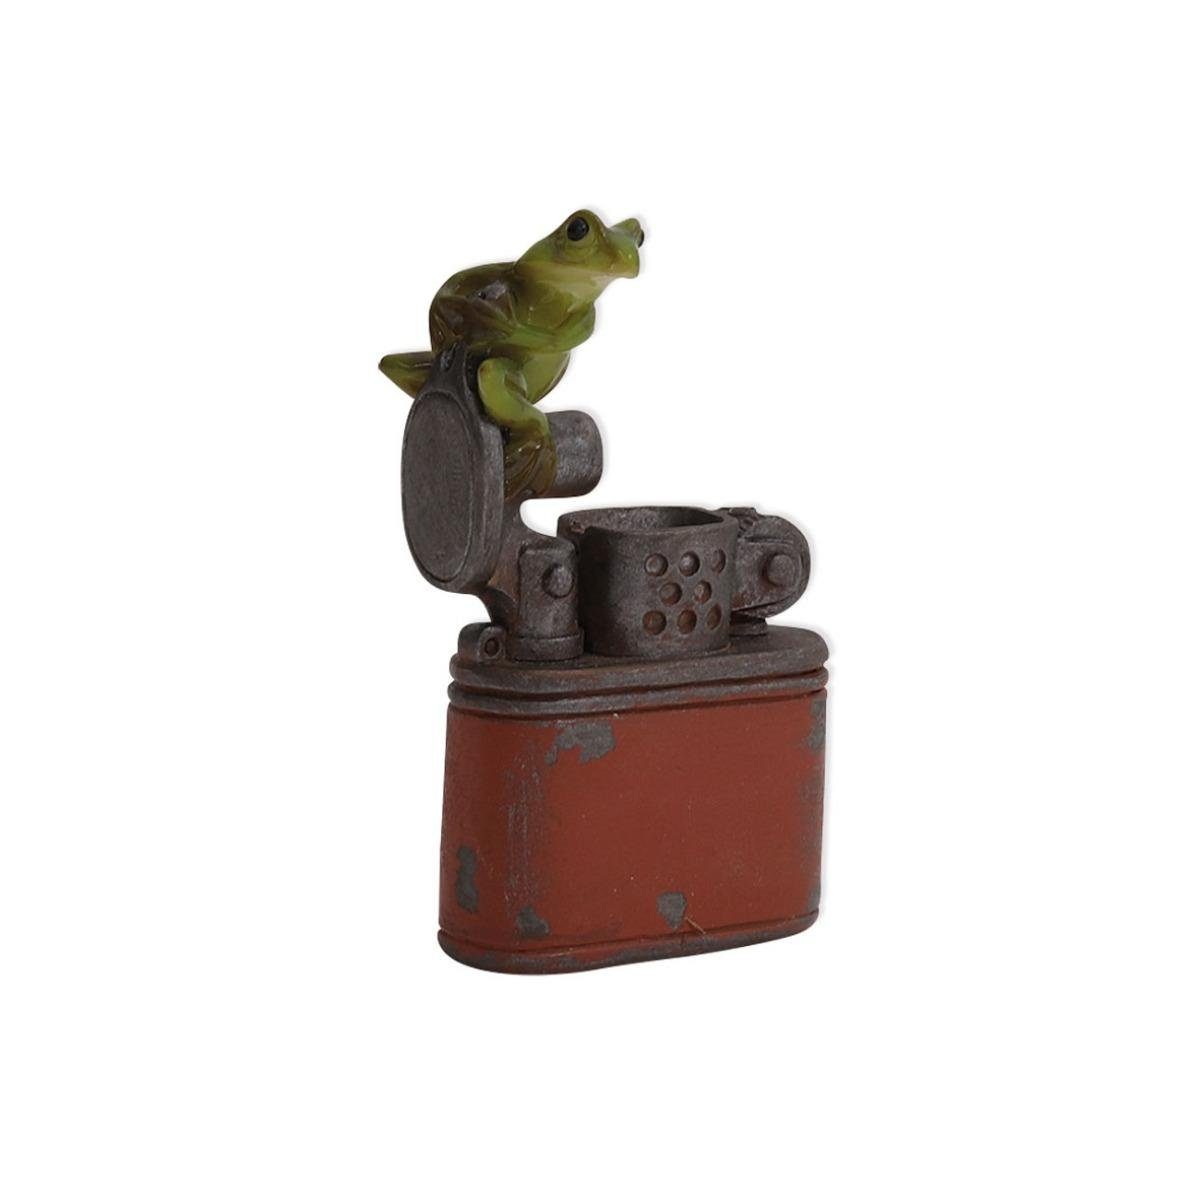 Seyko-Geschenke Dekofigur 091083 - Keramikfigur "Frosch Paul der Feurige", 7 cm